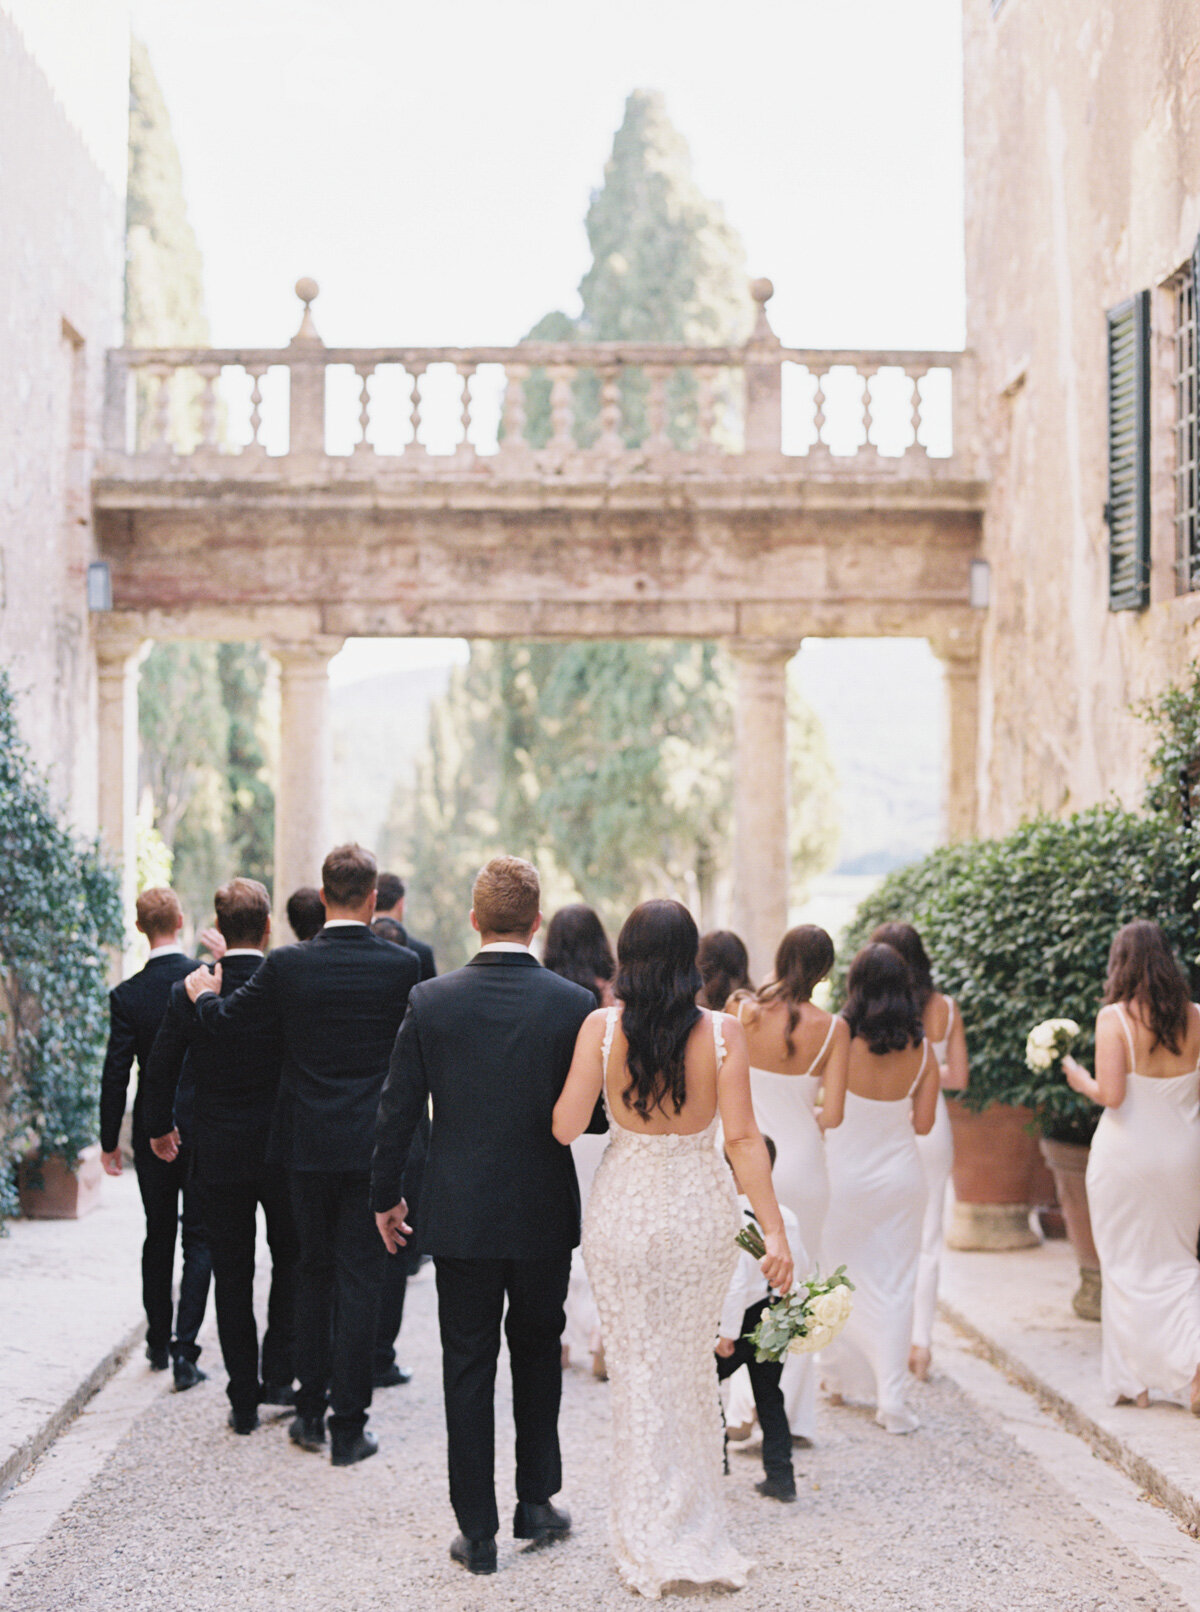 Borgo-Stommenano-Florence-Tuscany-Katie-Grant-destination-wedding (25 of 47).jpg